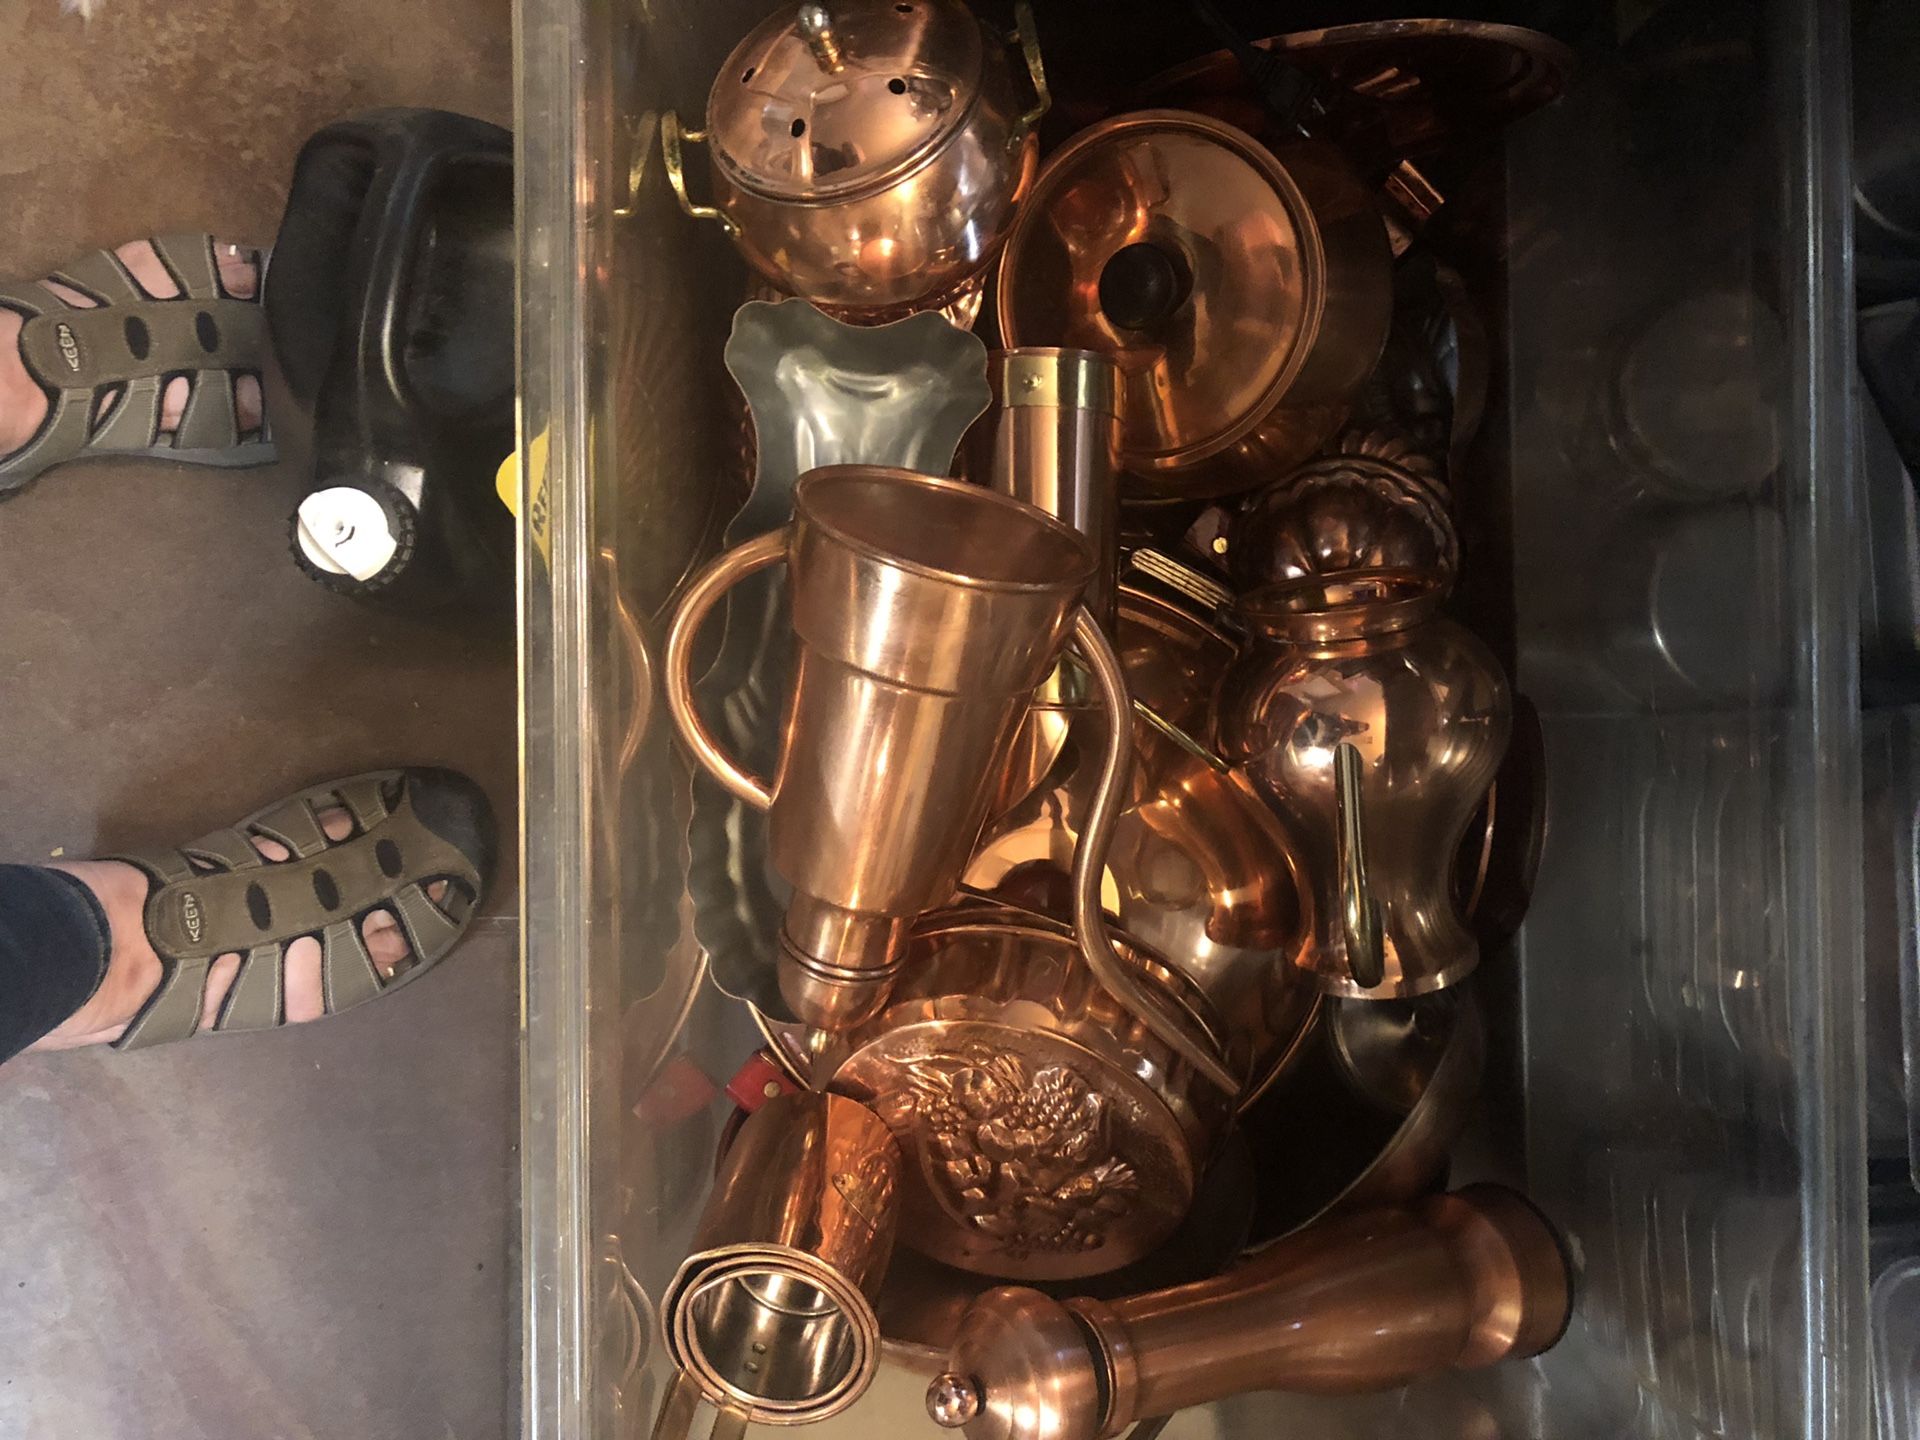 Copper pans ,teapots, and decorations